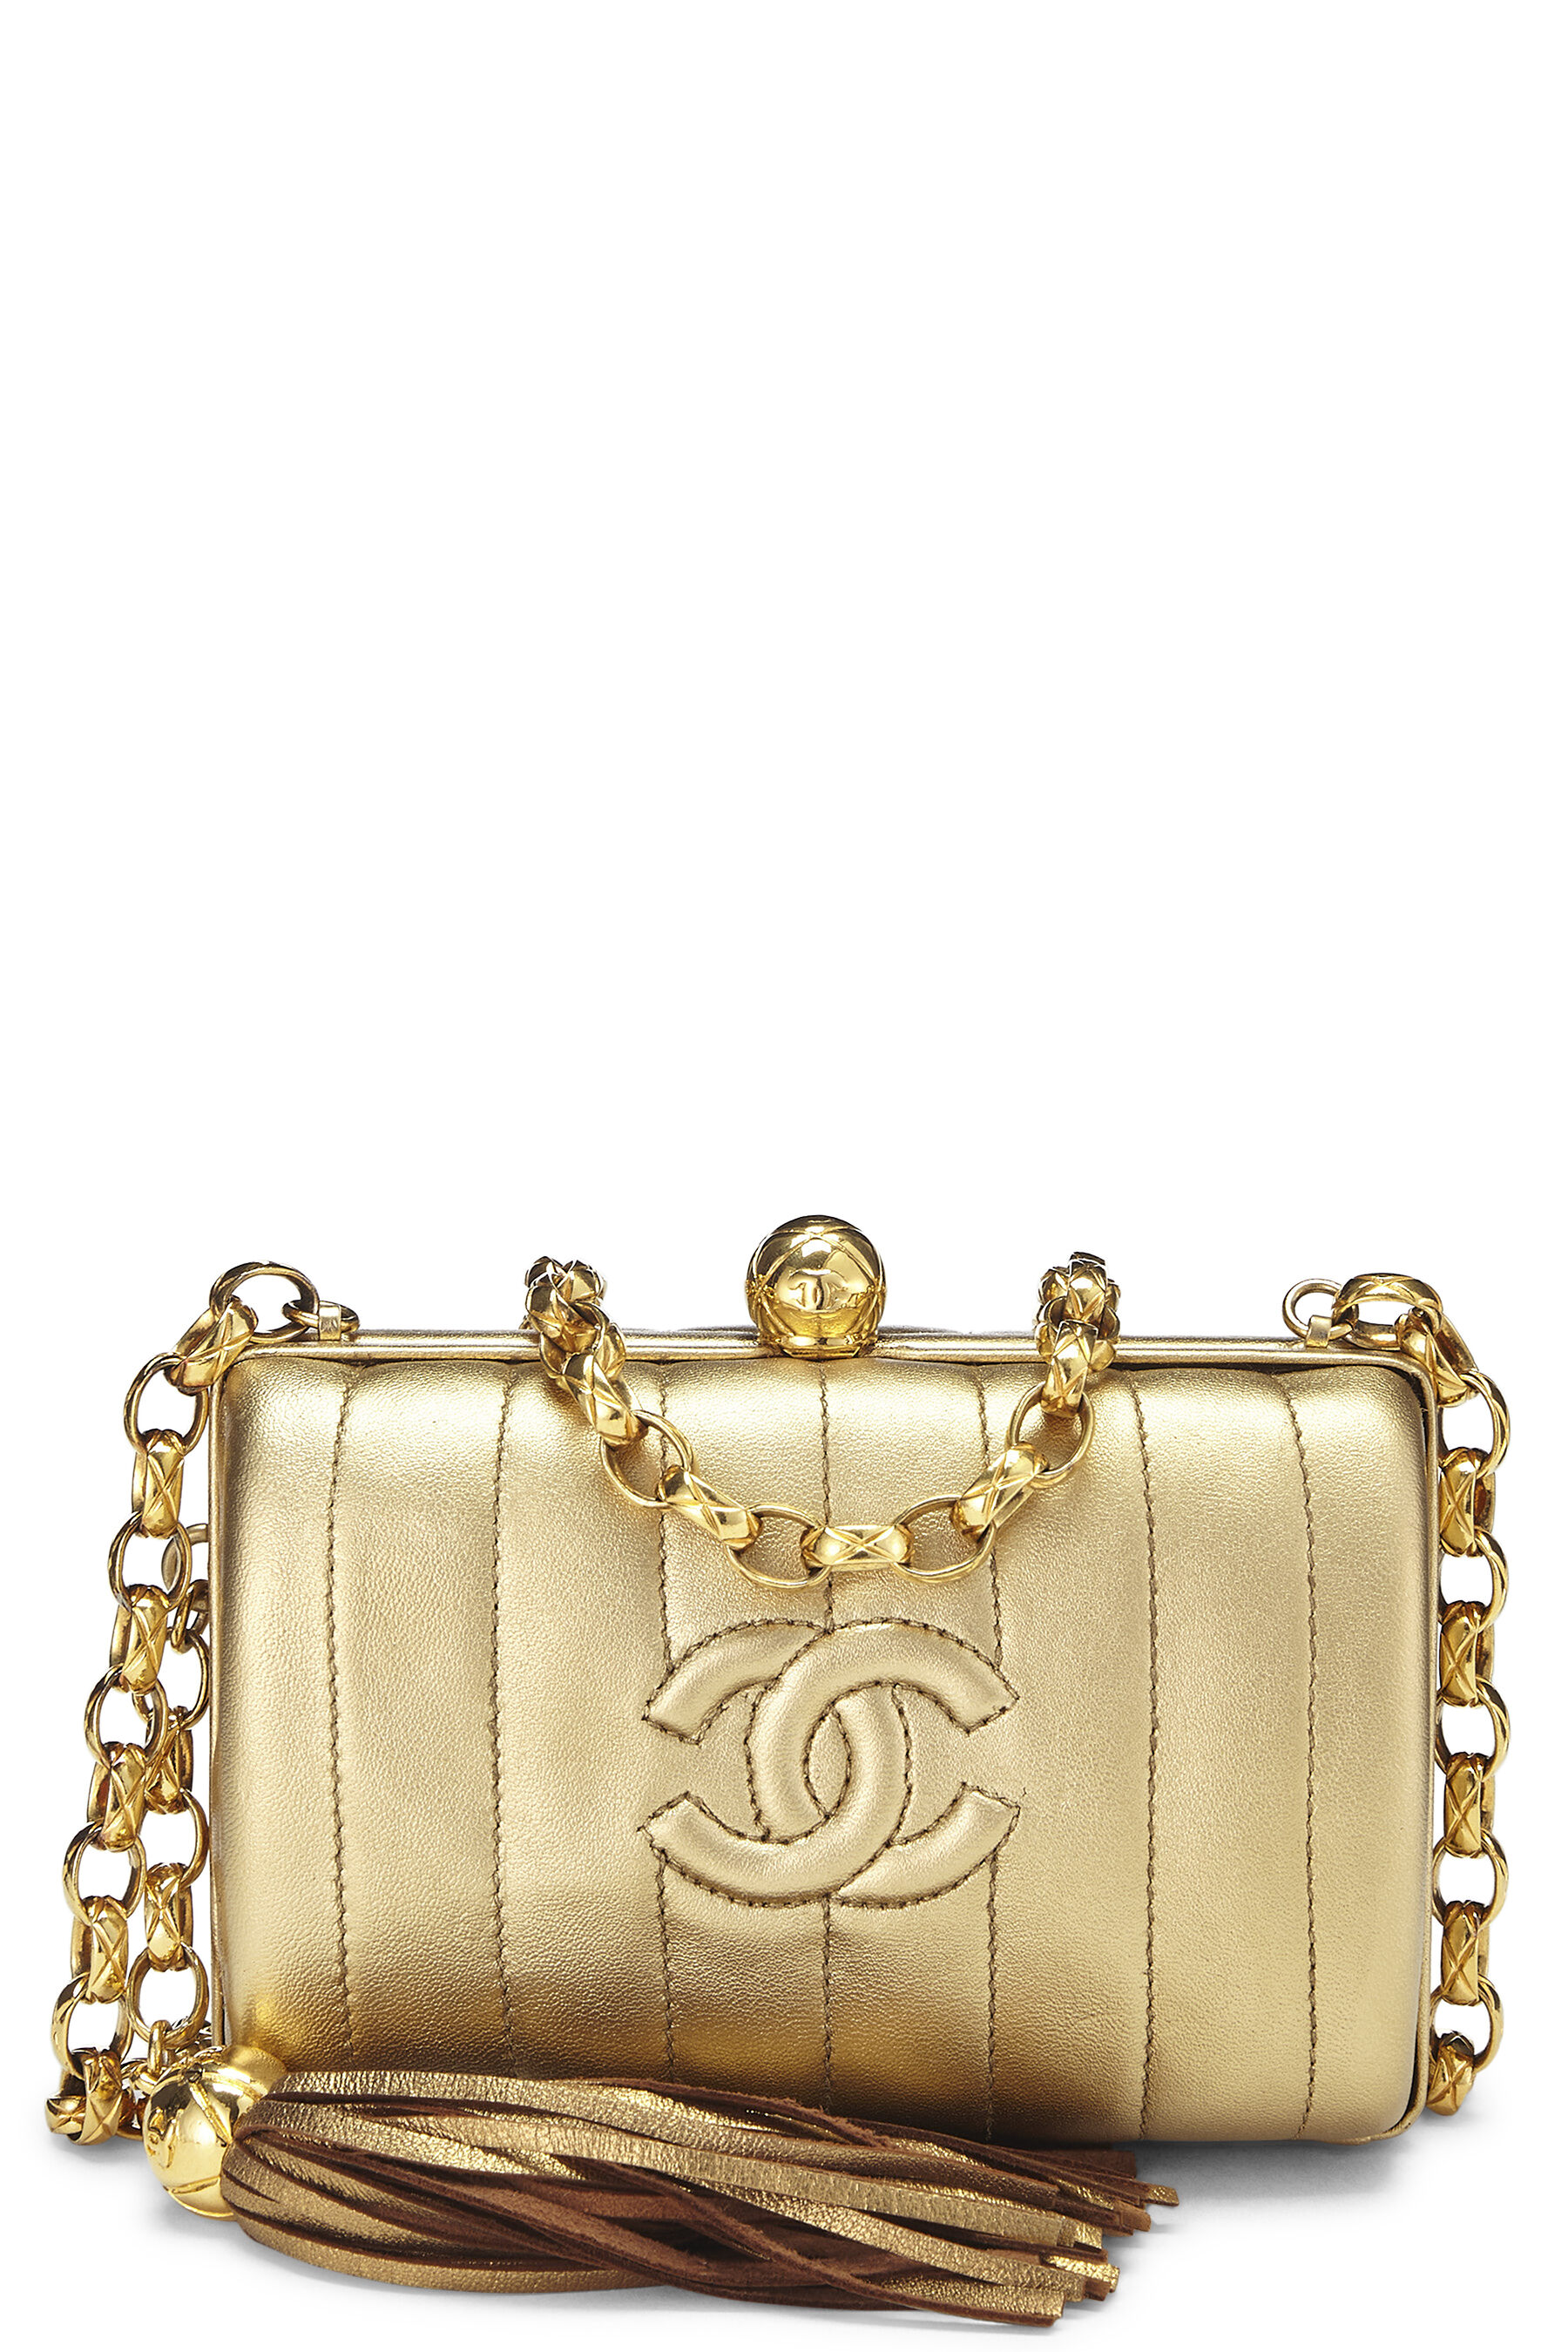 Chanel - Gold Lambskin 'CC' Evening Bag